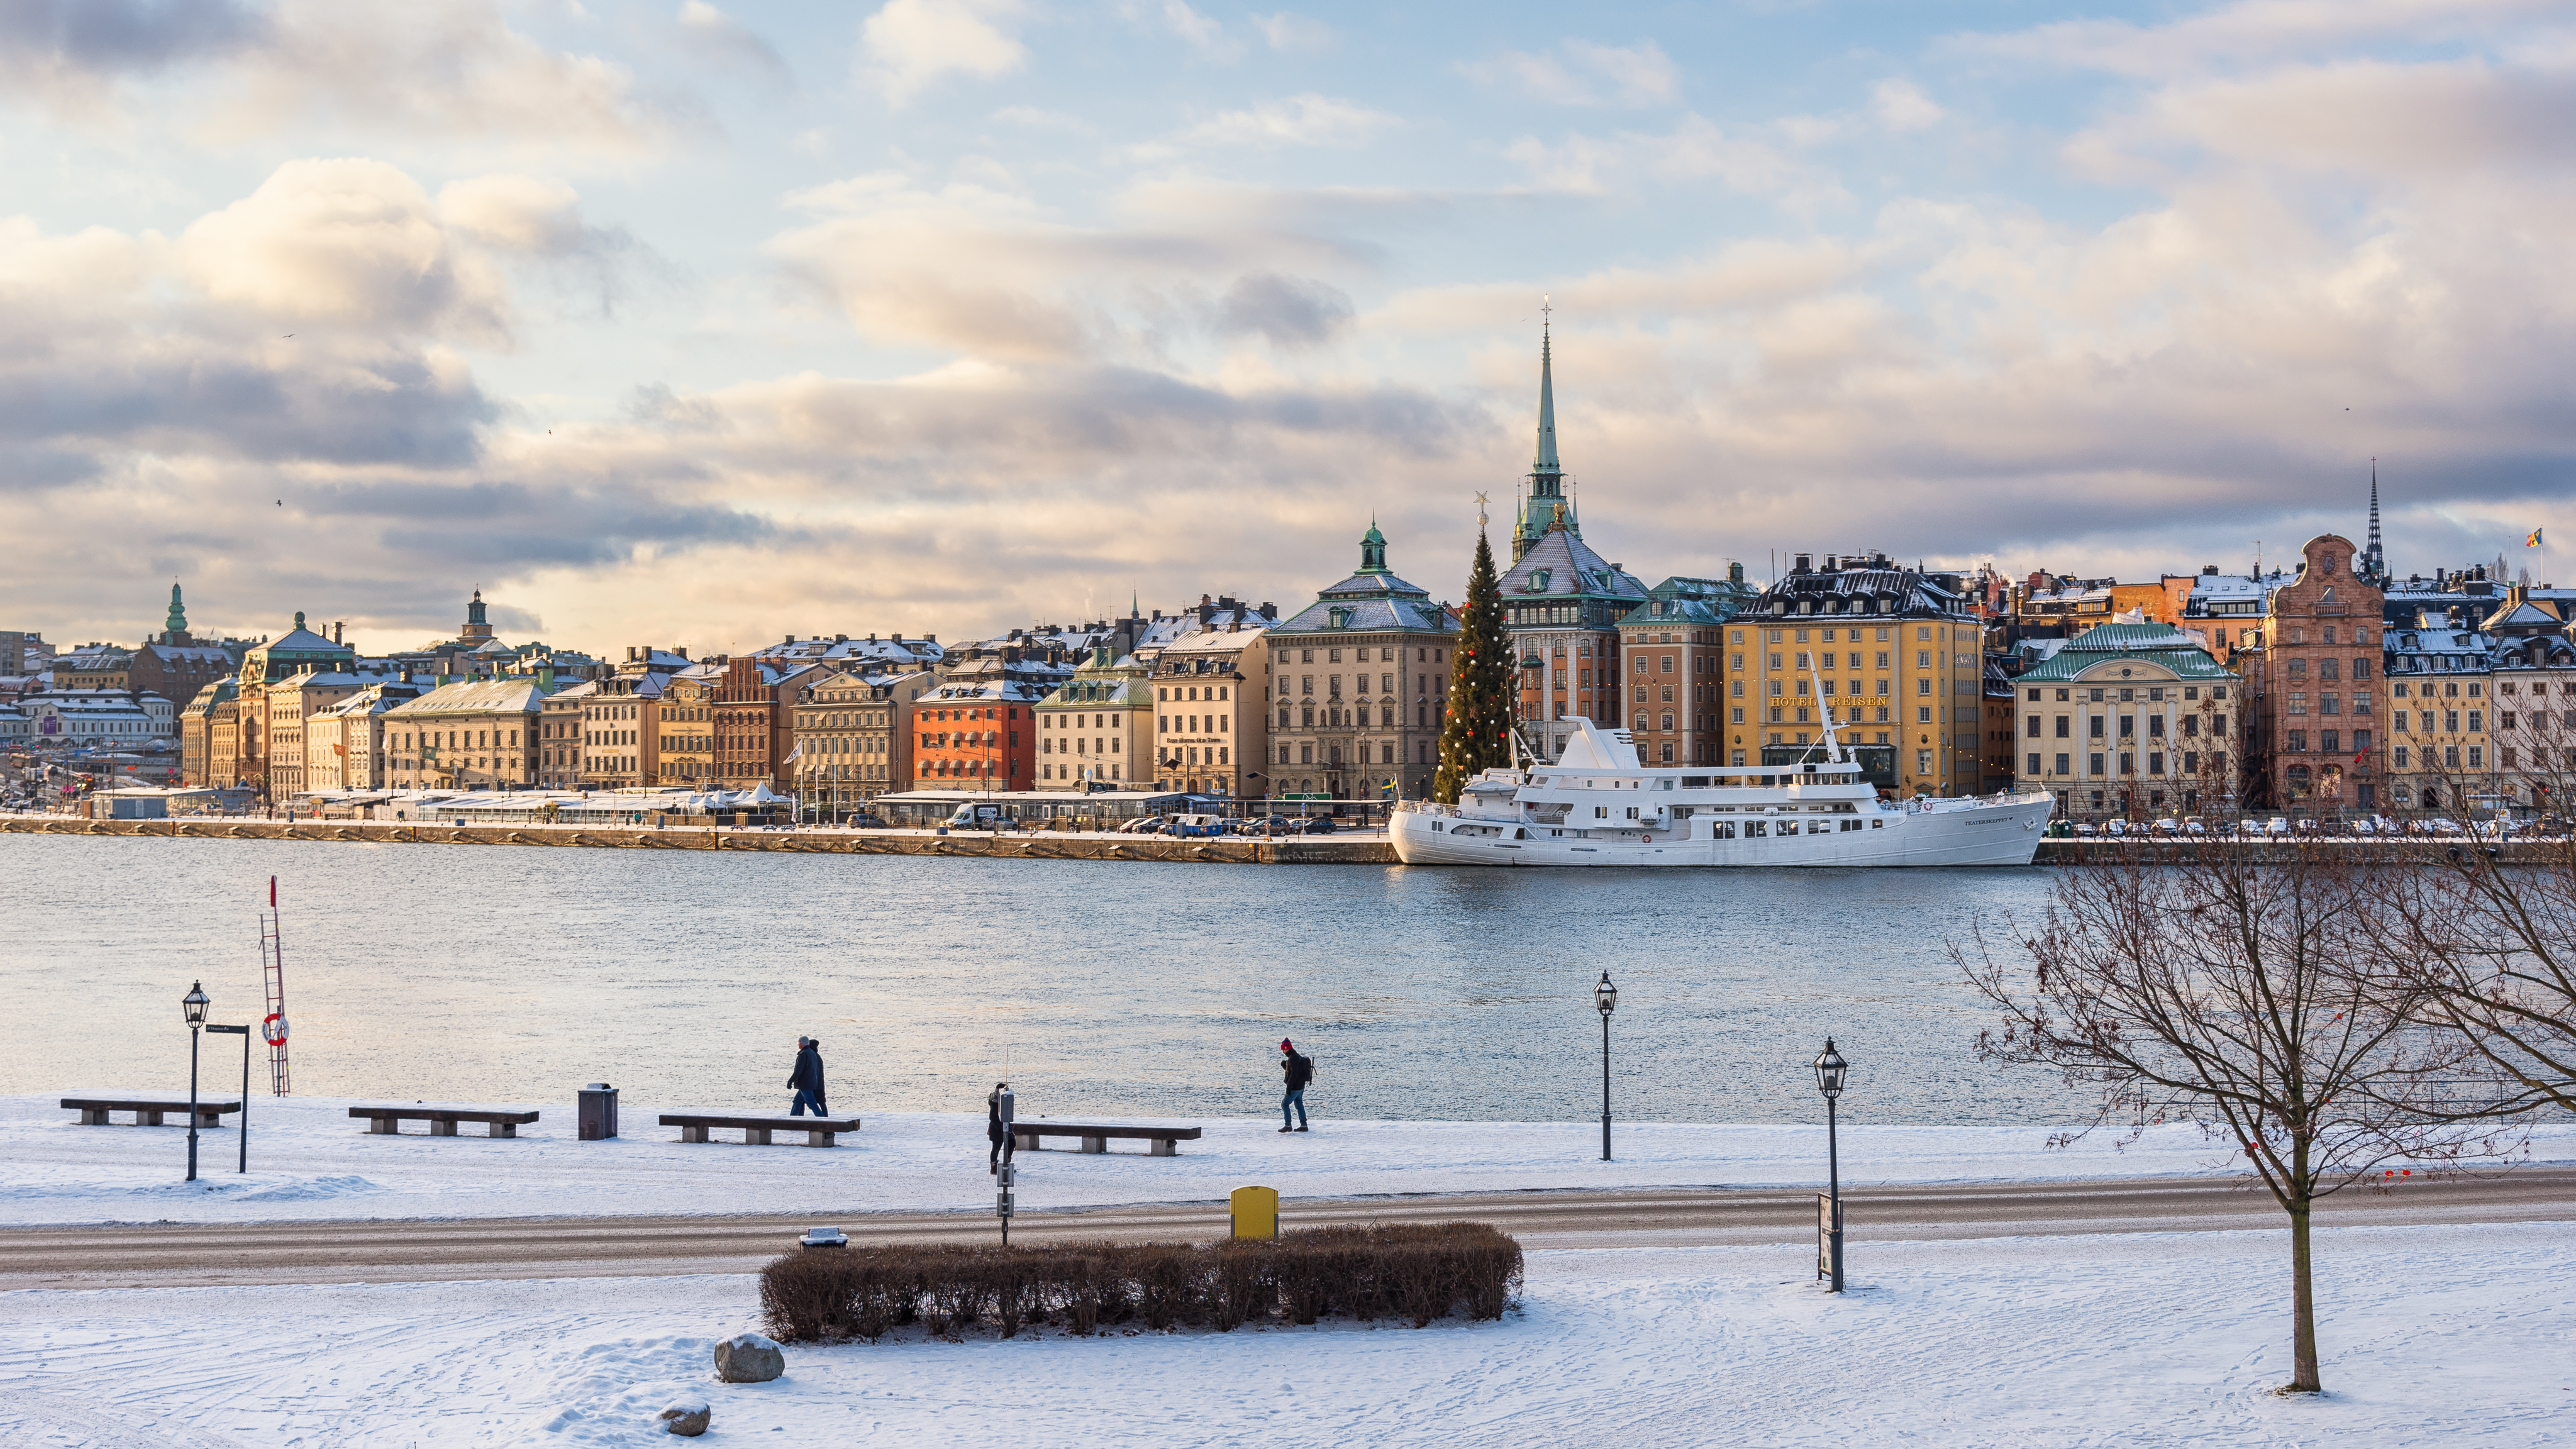 Top 5 activities to do in Stockholm